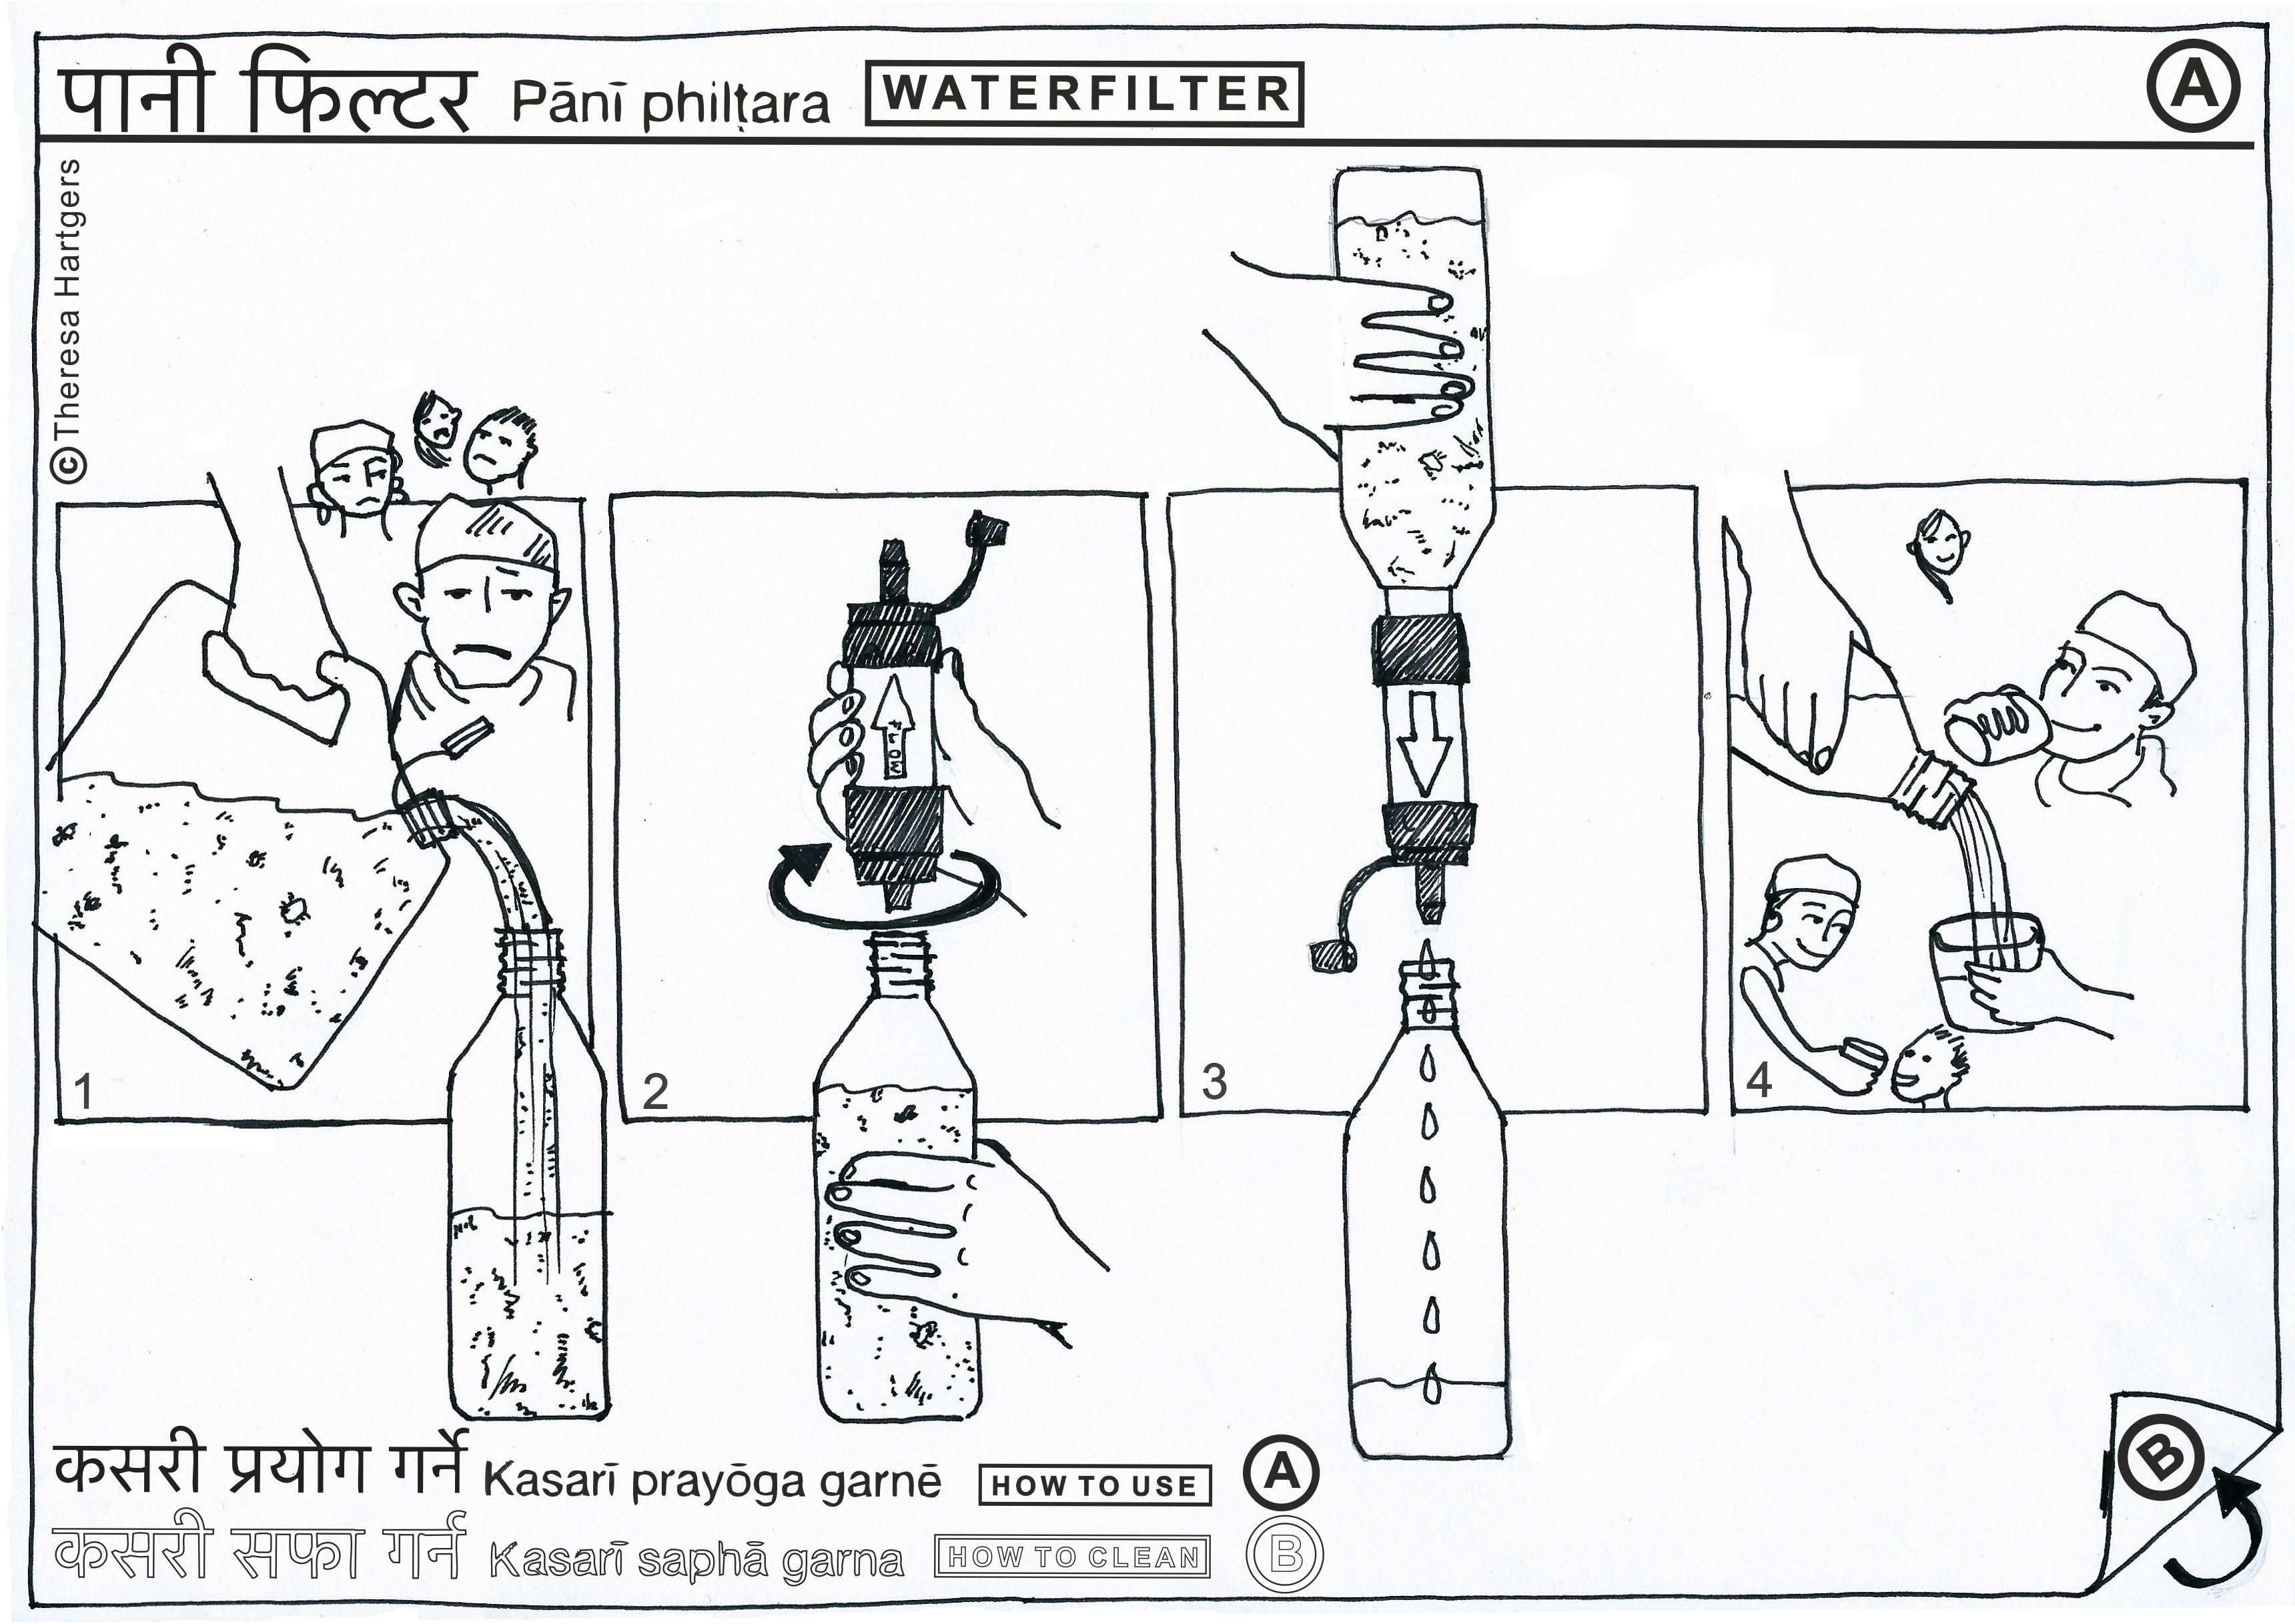 waterfilter manual theresa illustrator A